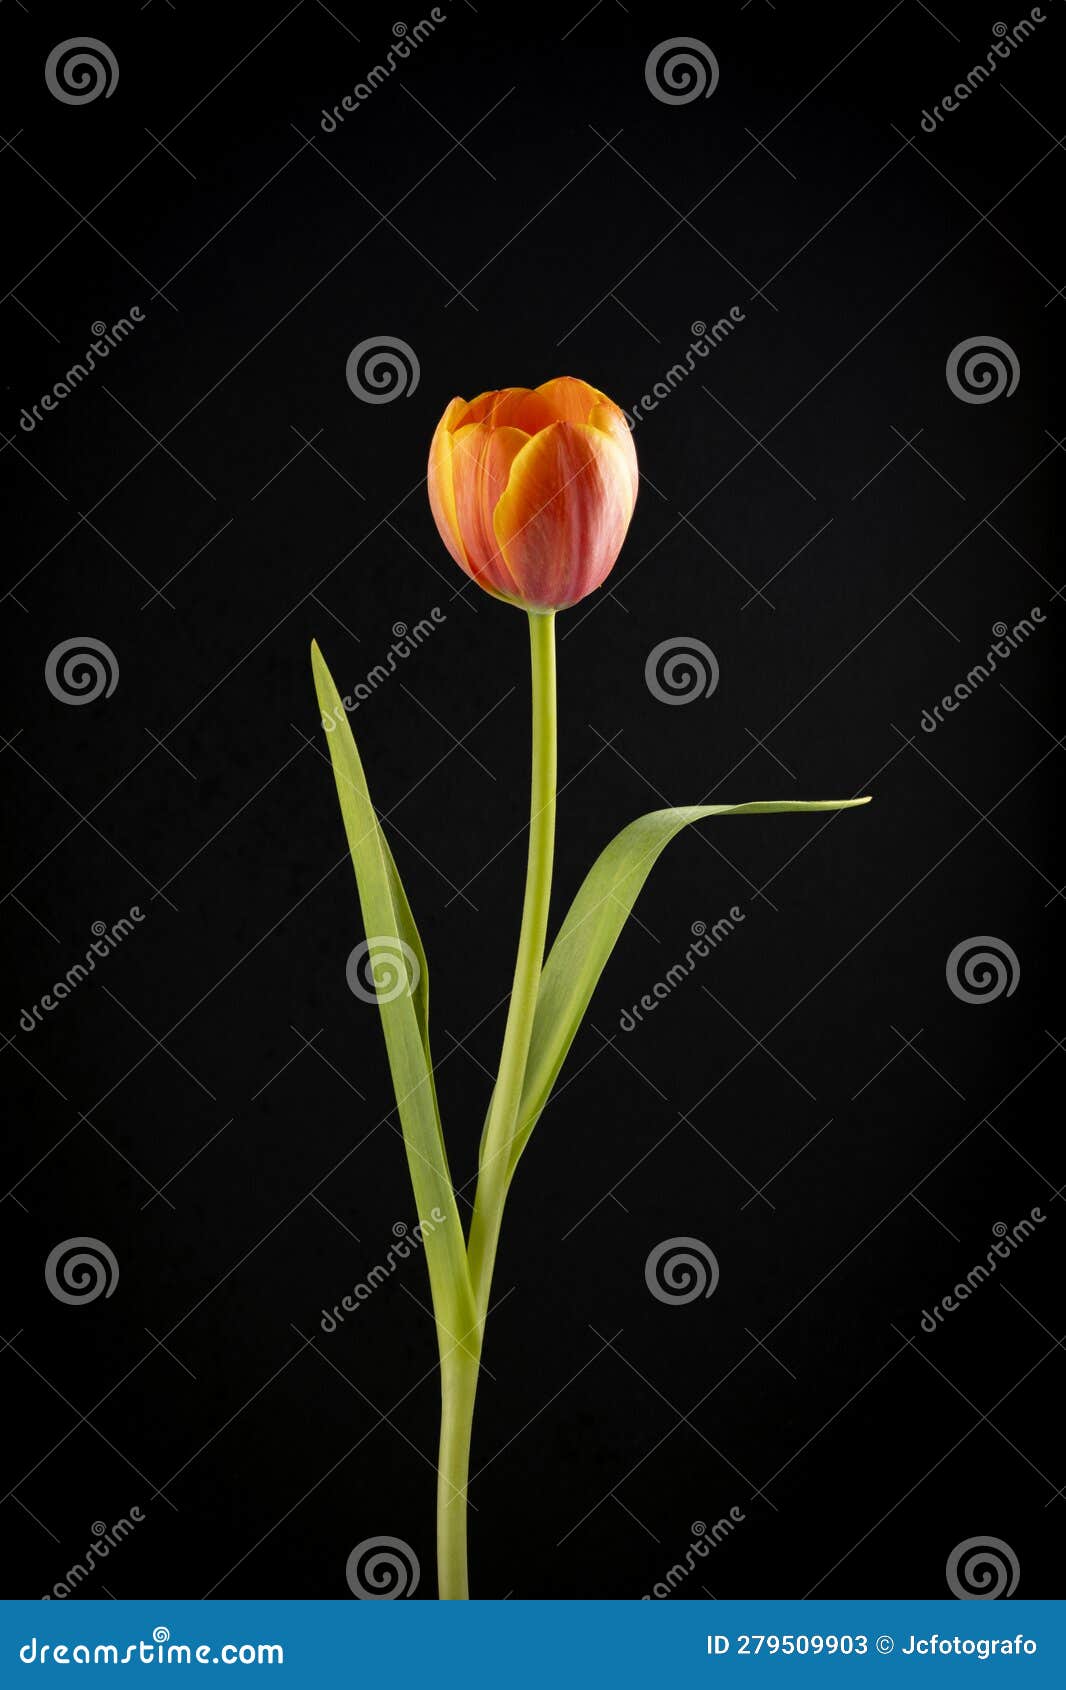 floral ornament of orange tulips on a black background